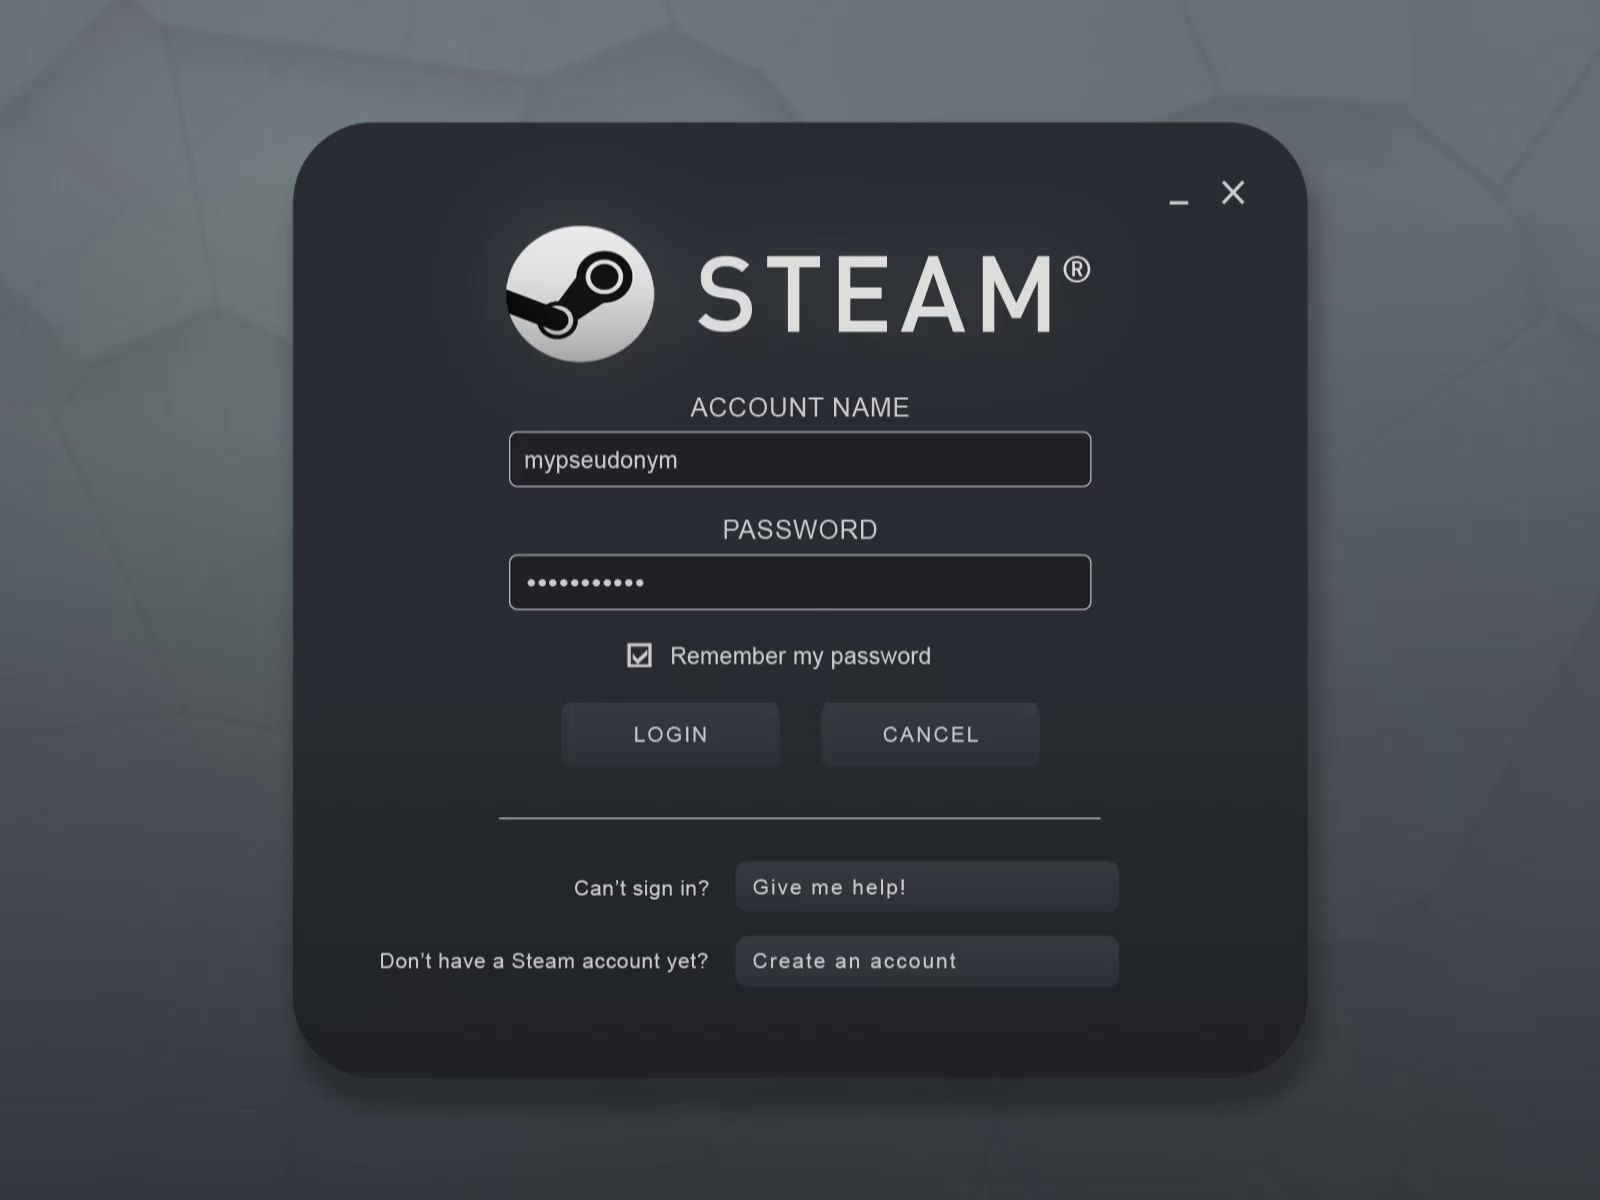 Steam App (login concept) by Nicolas Baas on Dribbble